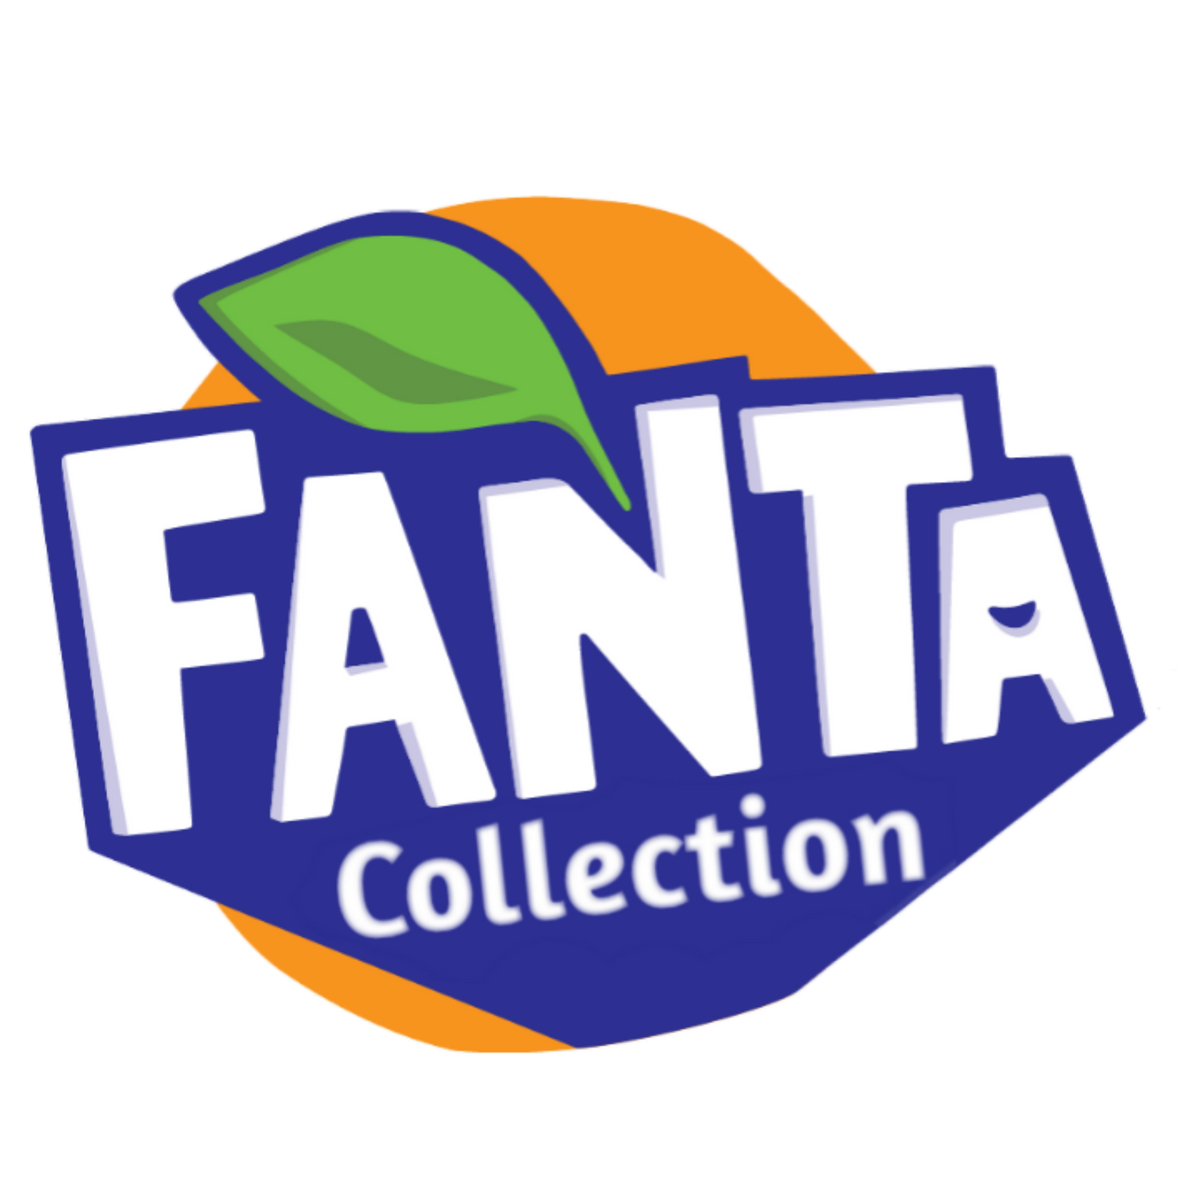 CollectionFanta